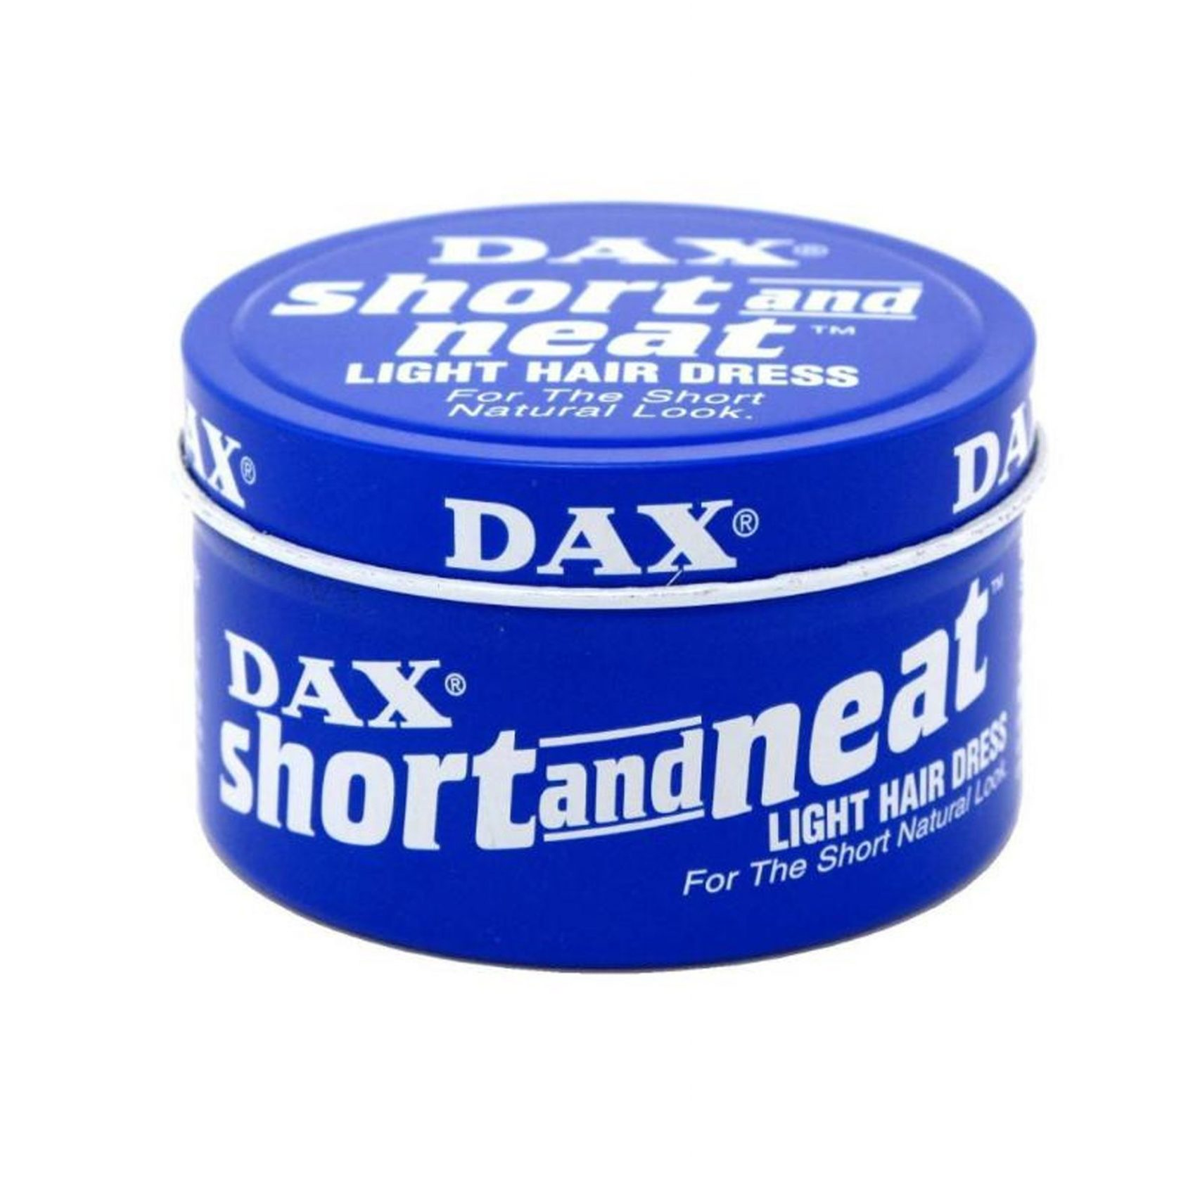 DAX SHORT AND NEAT LIGHT HAIR DRESS FOR LIGHT HOLD, MEDIUM SHINE